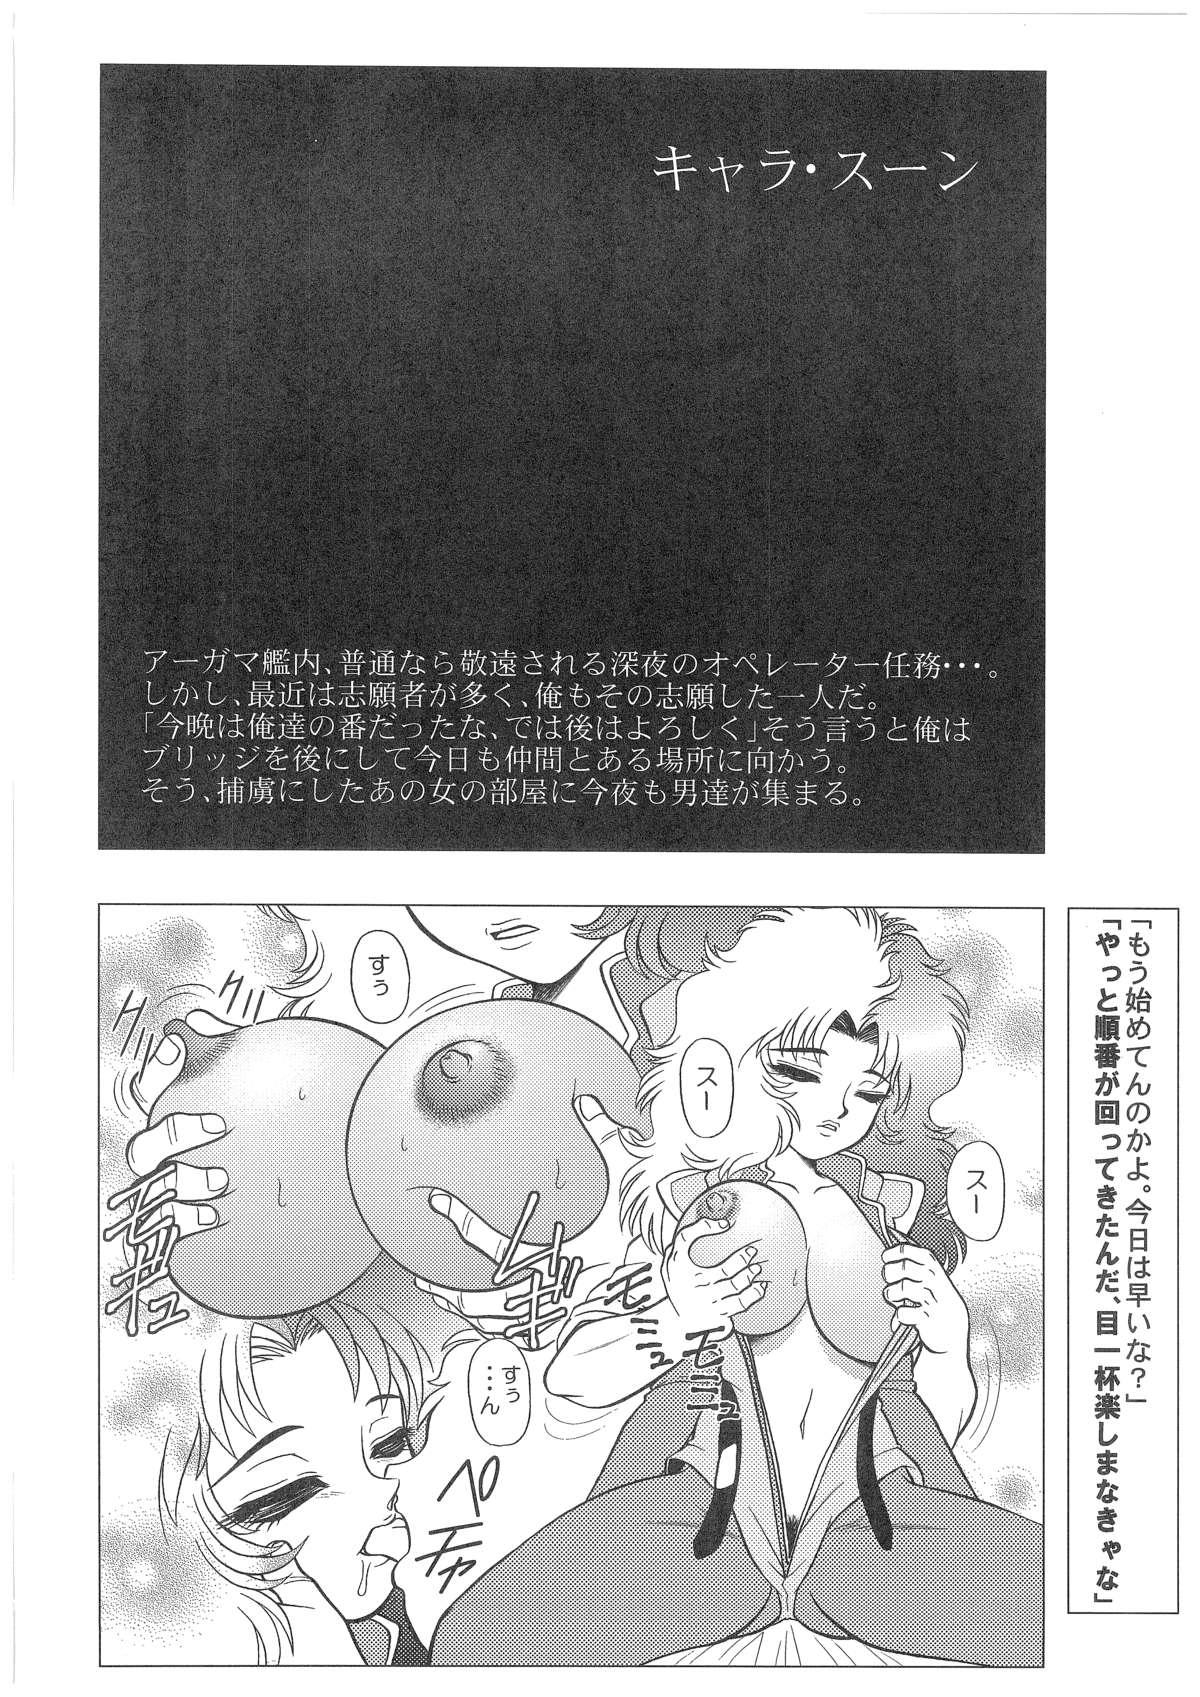 Gostosa CHARA EMU W☆B 007 - Gundam Victory gundam Gundam 0080 Young - Page 11